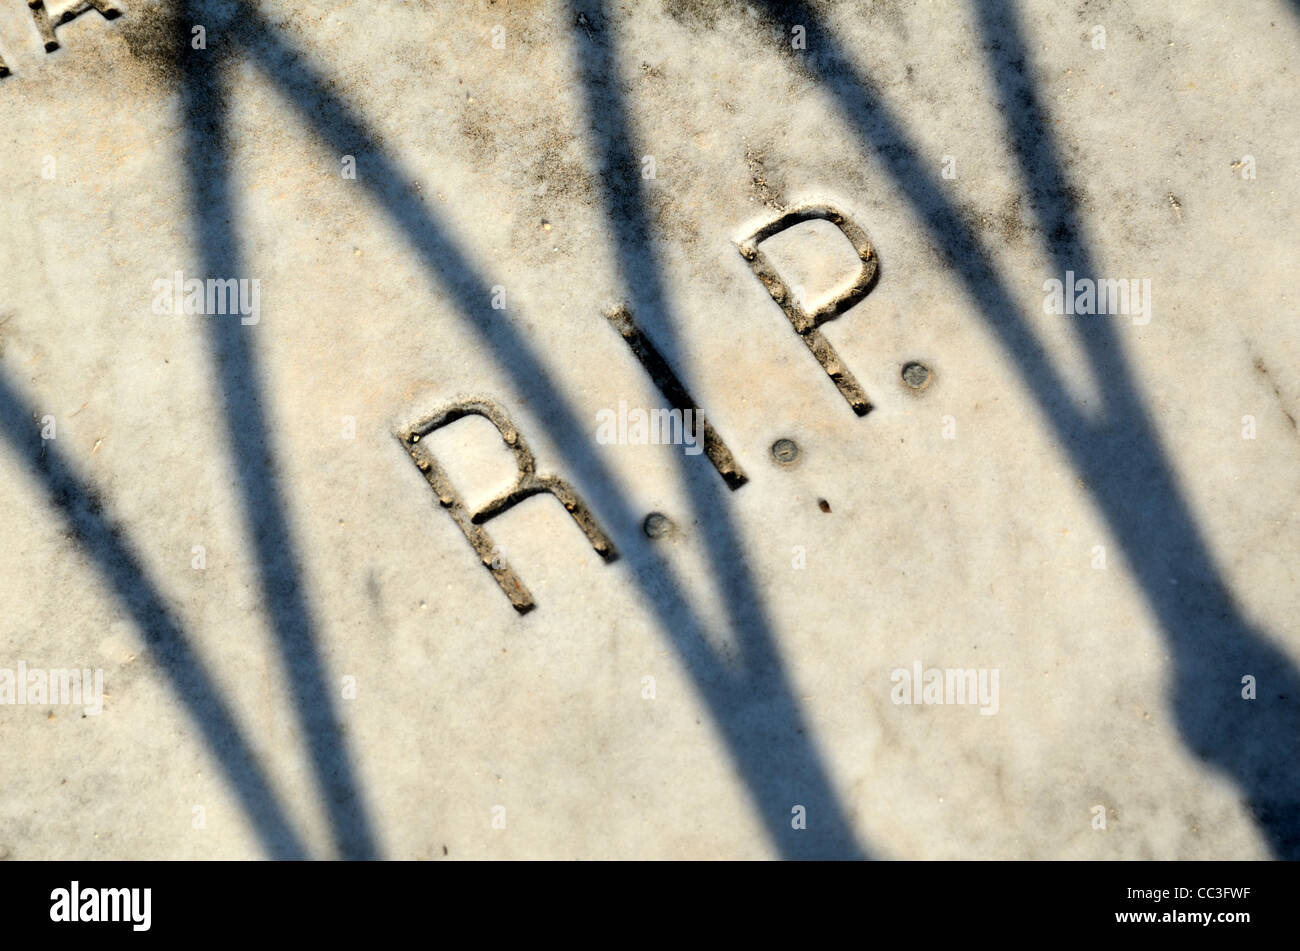 RIP resto en Paz escrito en una tumba, tumba o tumba en el antiguo cementerio, cementerio o Cimitière du Vieux Château Menton Francia Foto de stock